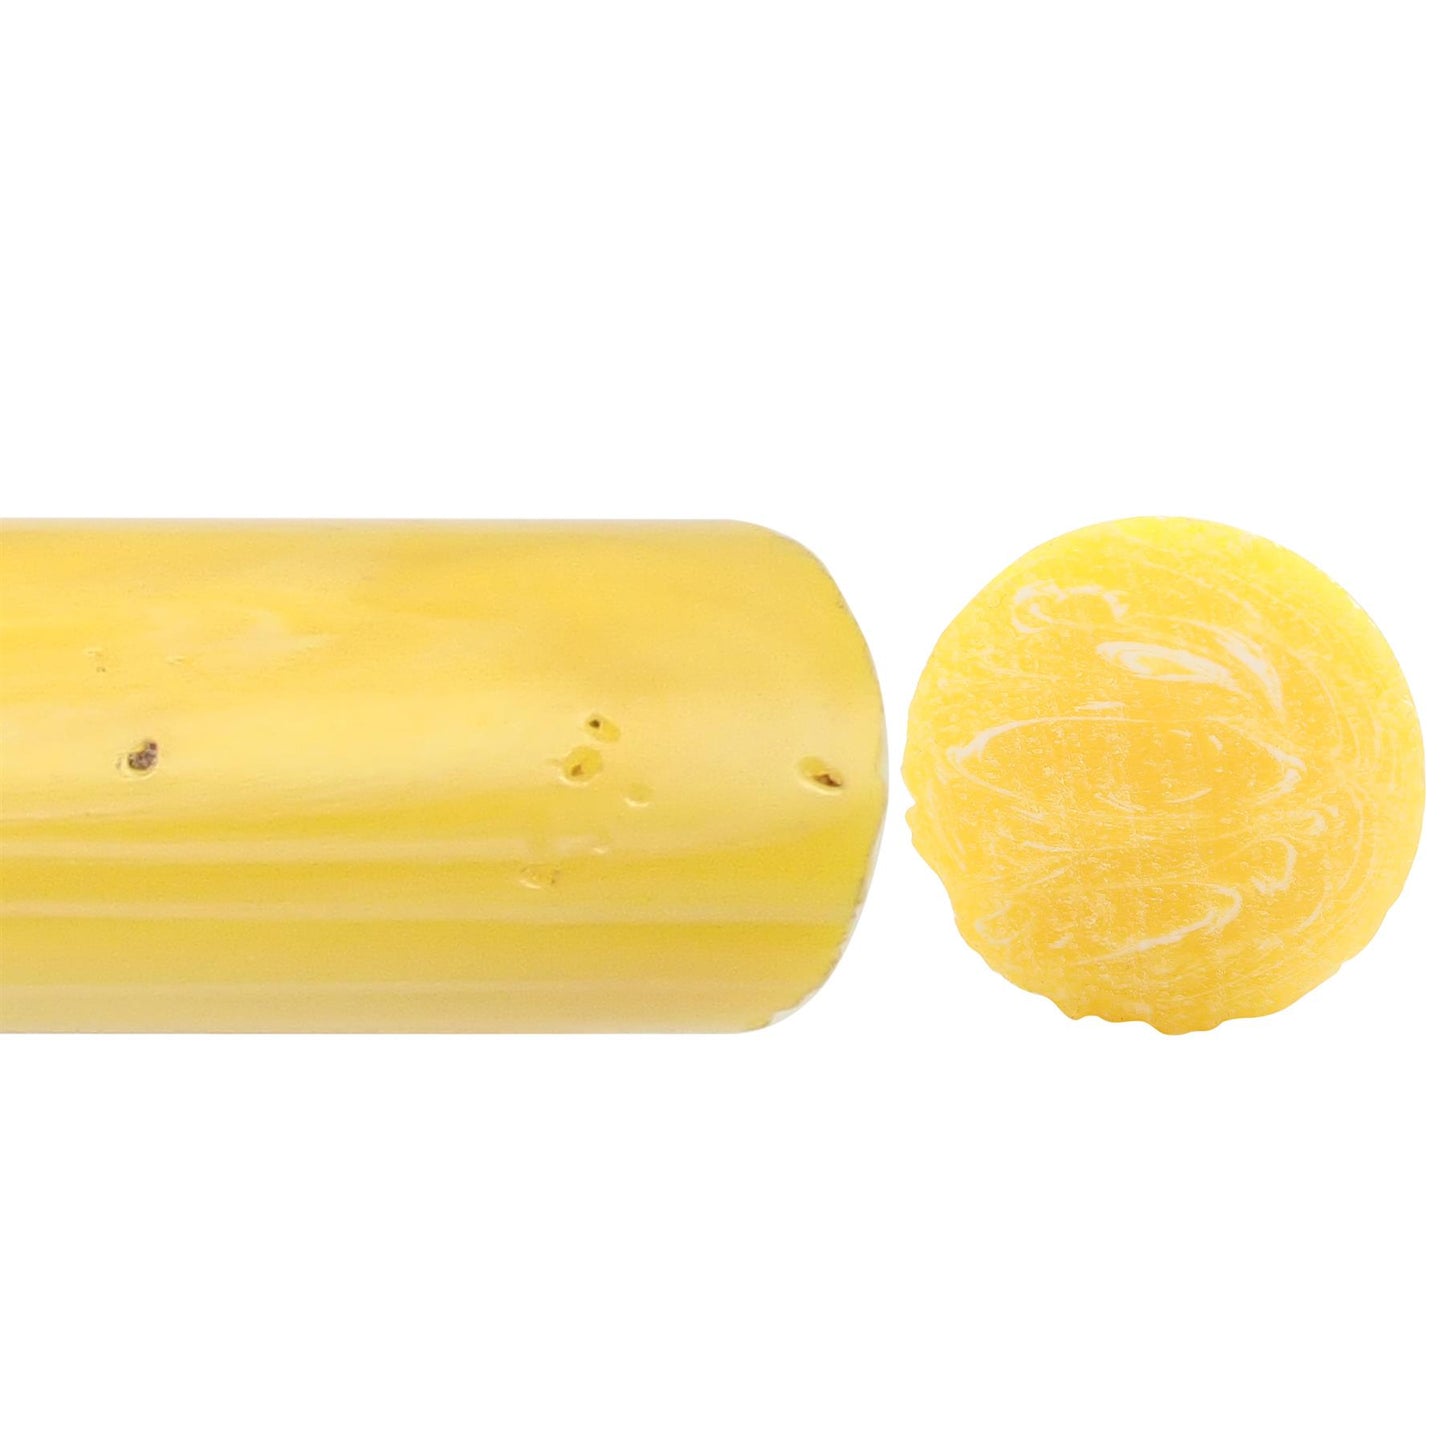 [Turners' Mill] Lemon Yellow Polyester Turning Blank - 63.5x39x39mm